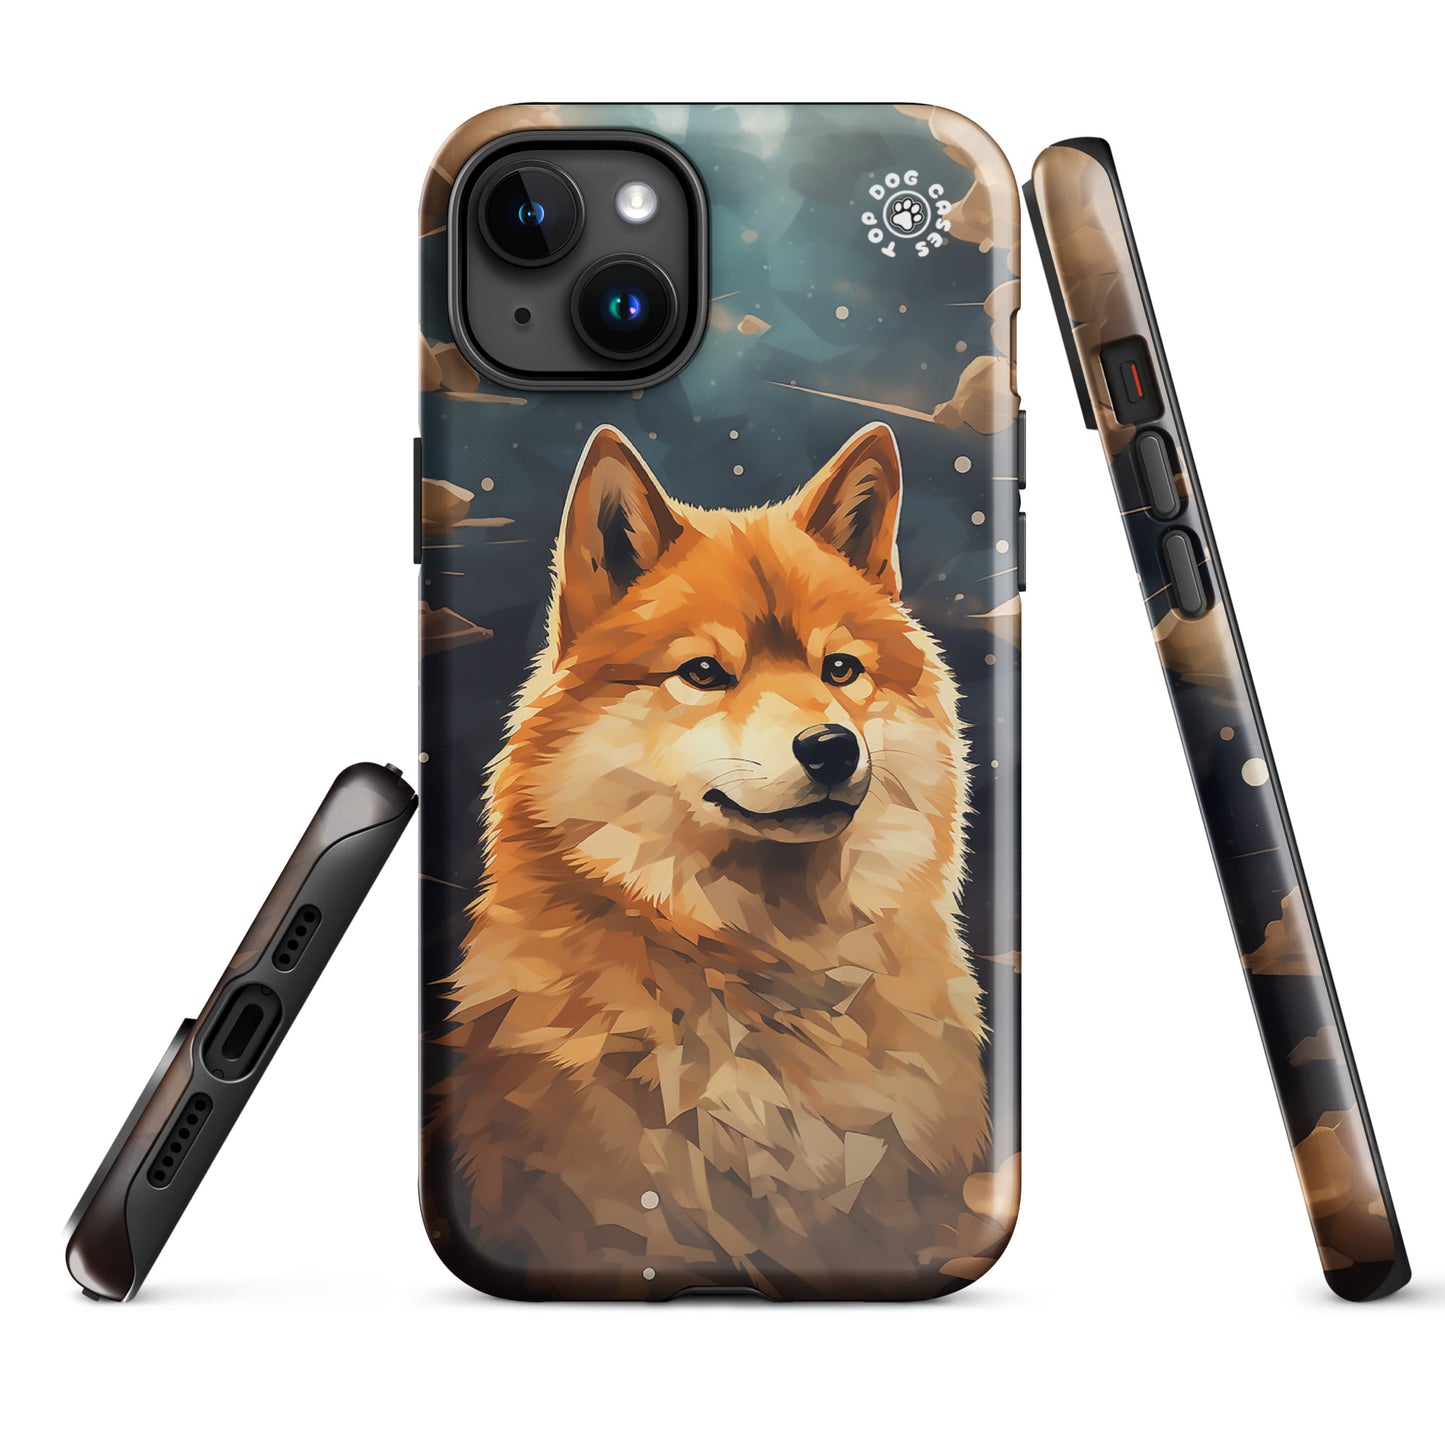 Akita - iPhone Case - Cute Phone Cases